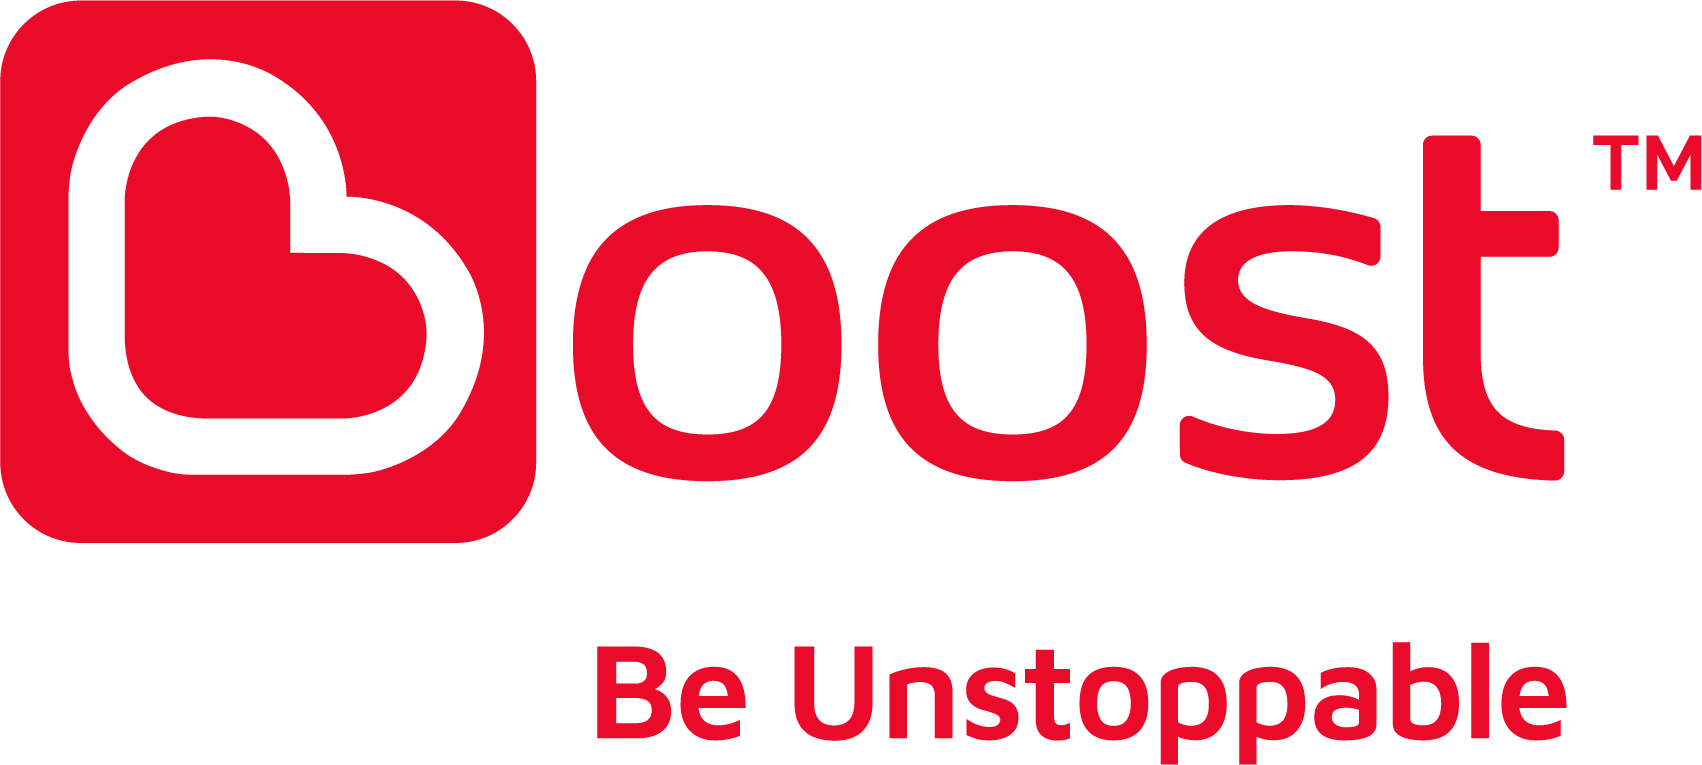 Photo Boost logo